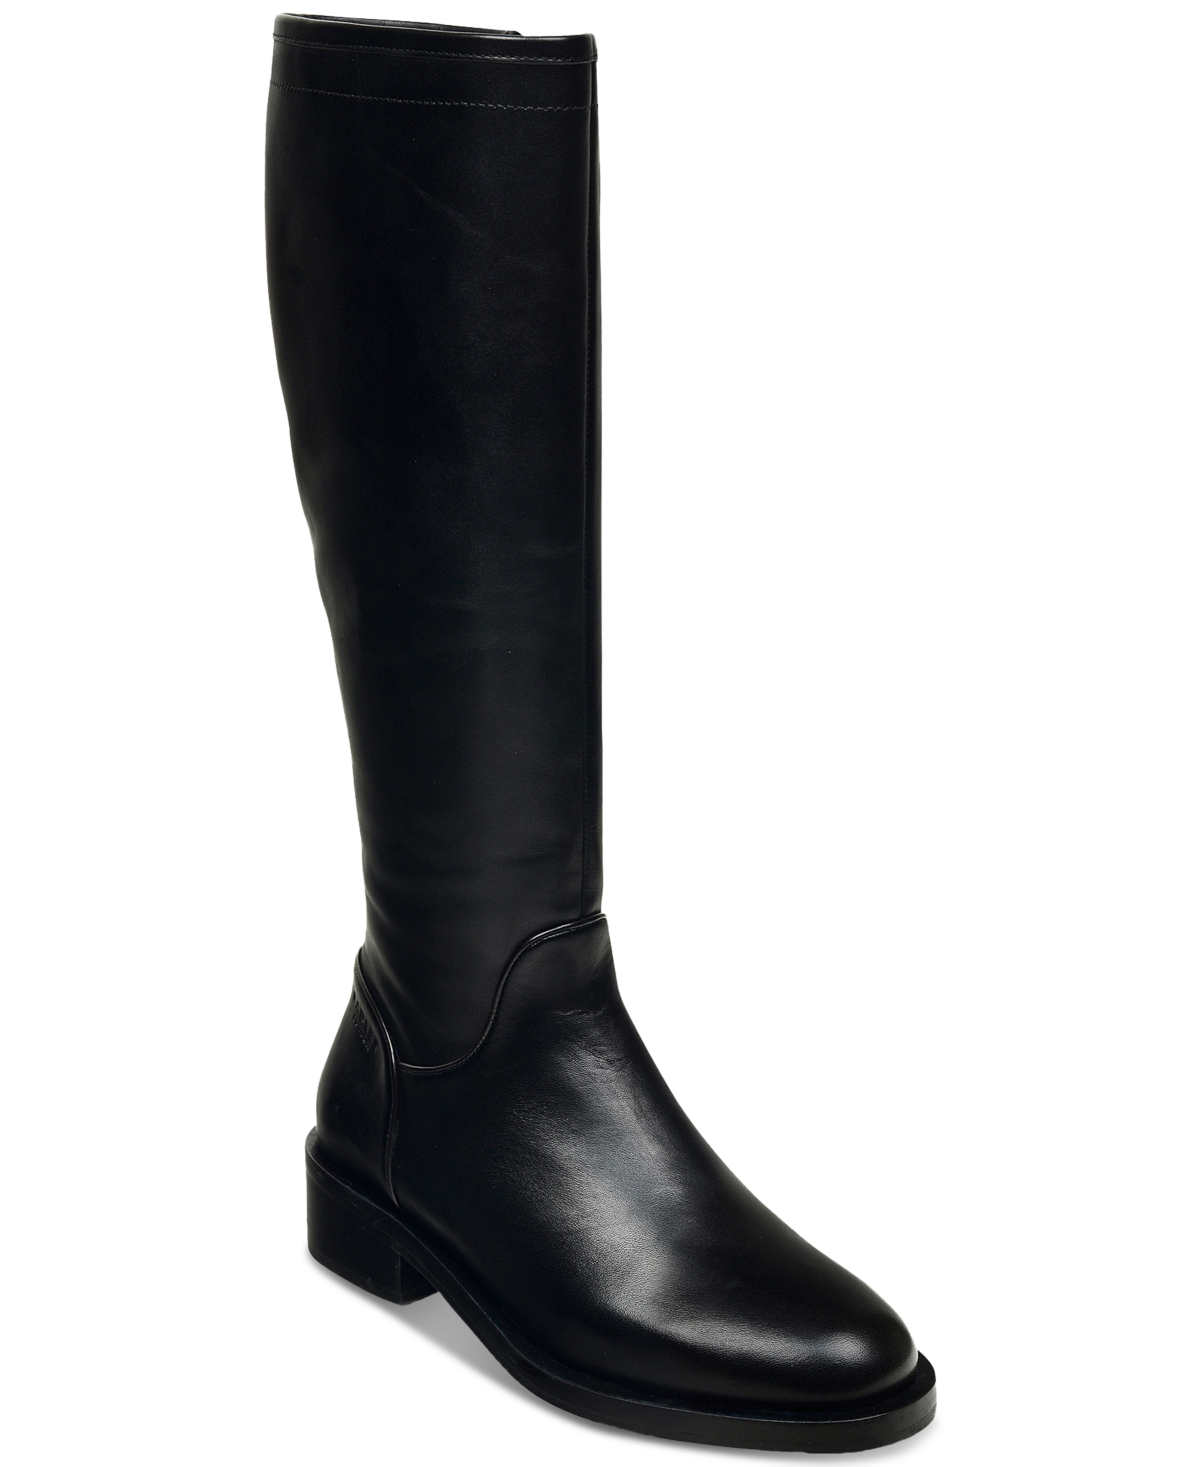 Women's Abbotstone Road Long Riding Boots - Black